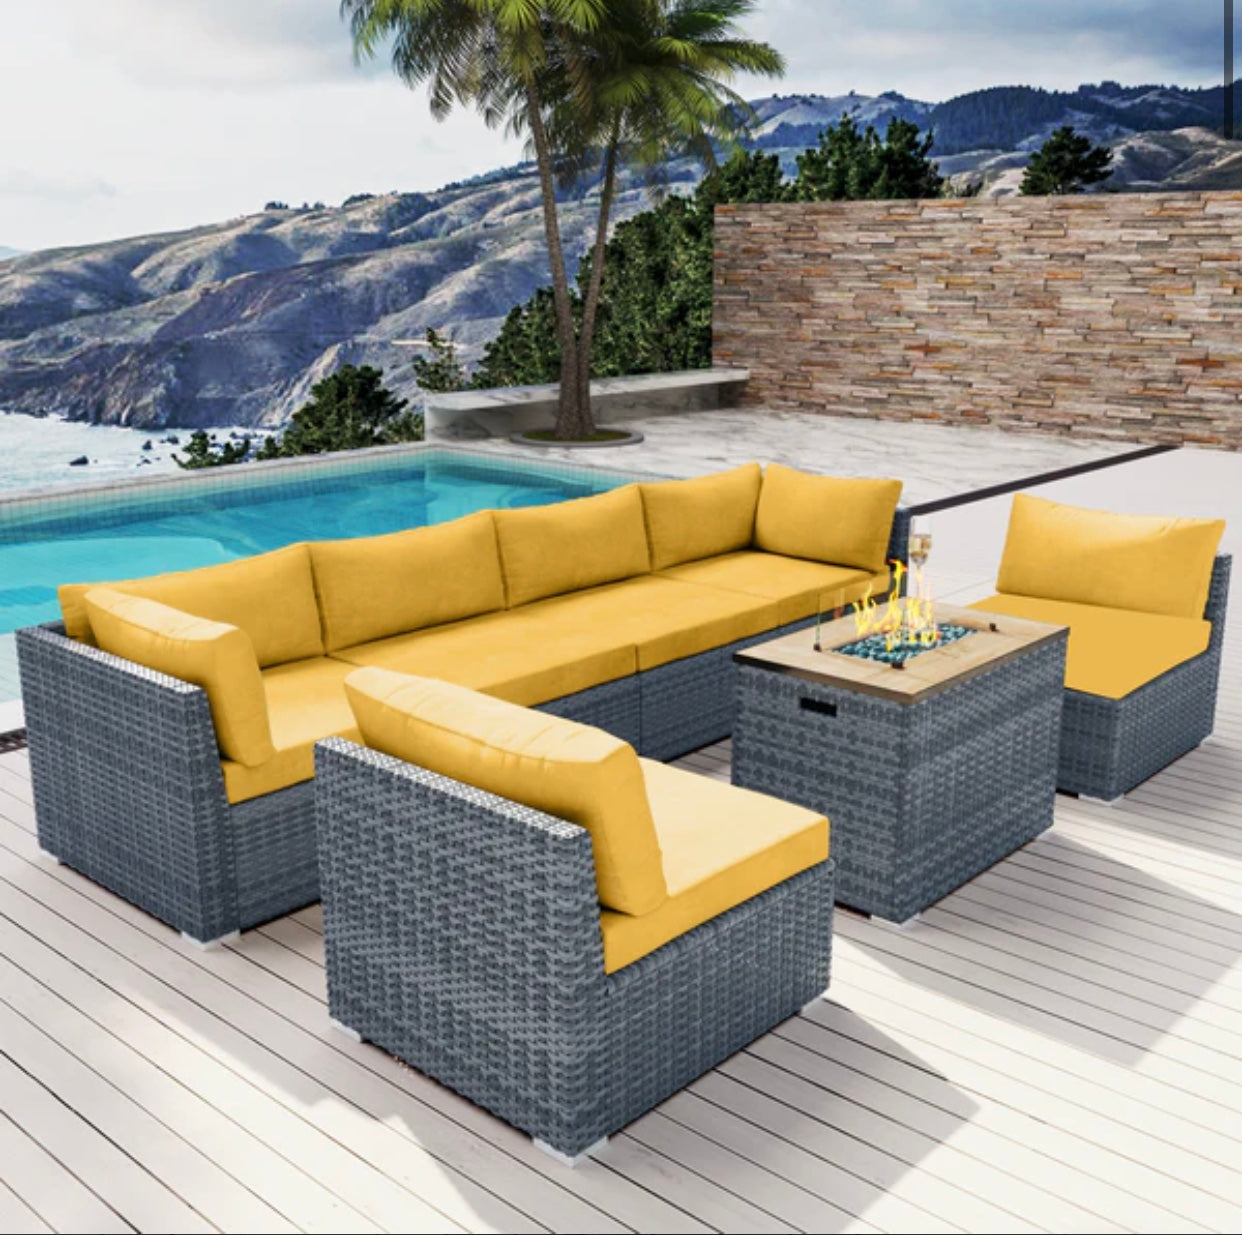 Royal Yellow 7 Seven piece Outdoor Patio Furniture with Propane Fire Pit Gray Wicker Santa Monica Beach